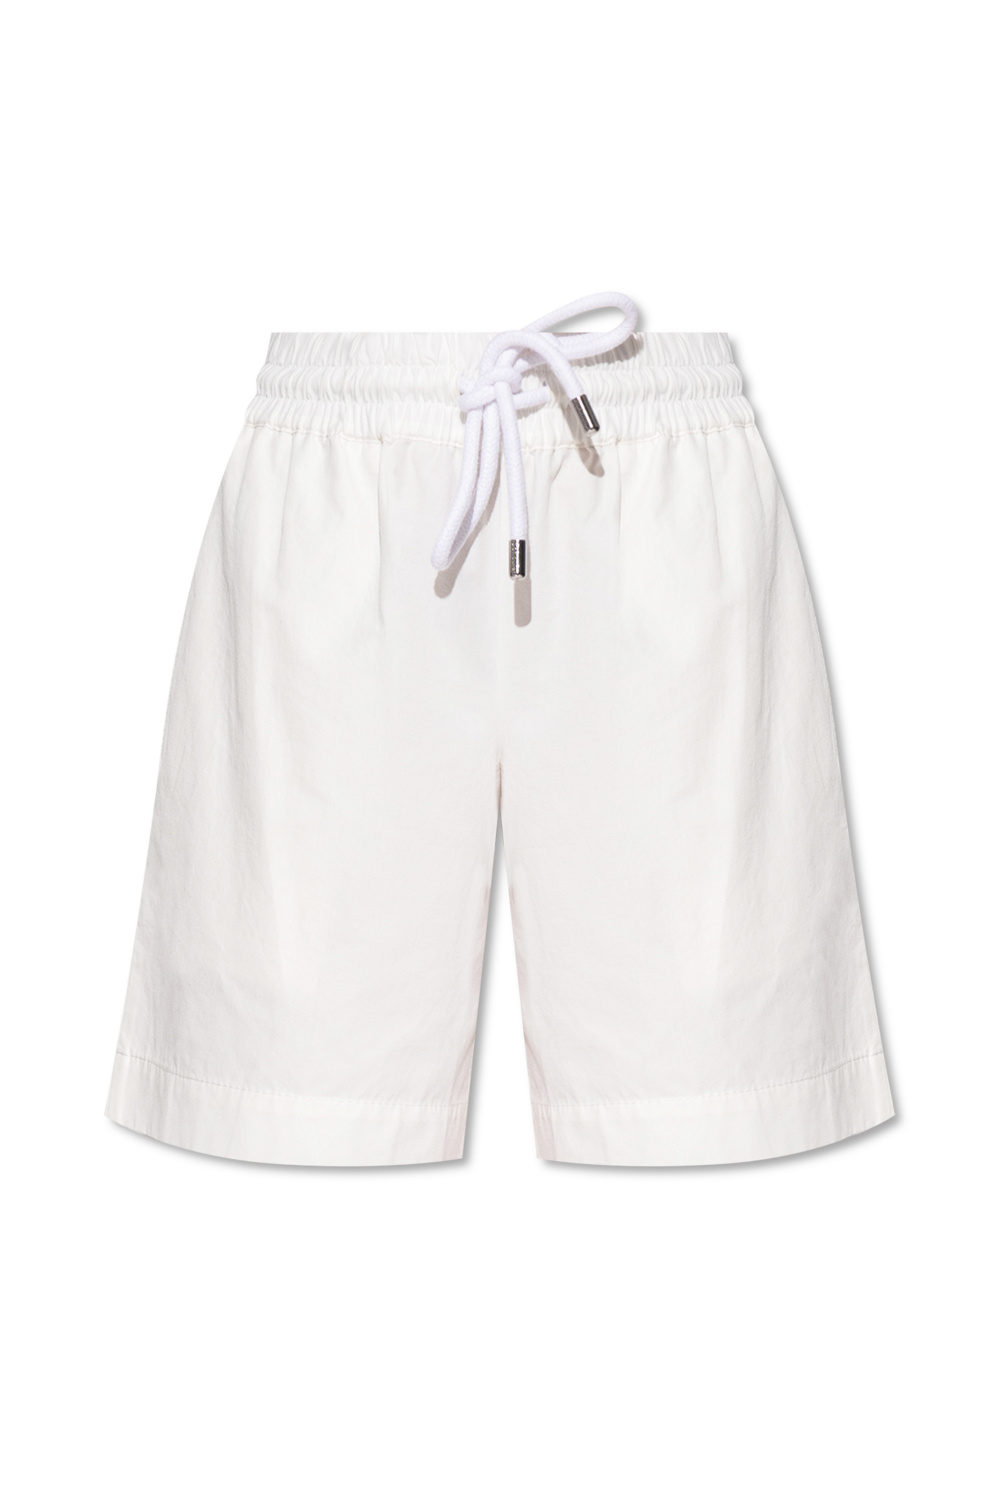 Proenza Schouler White Label Oversize shorts